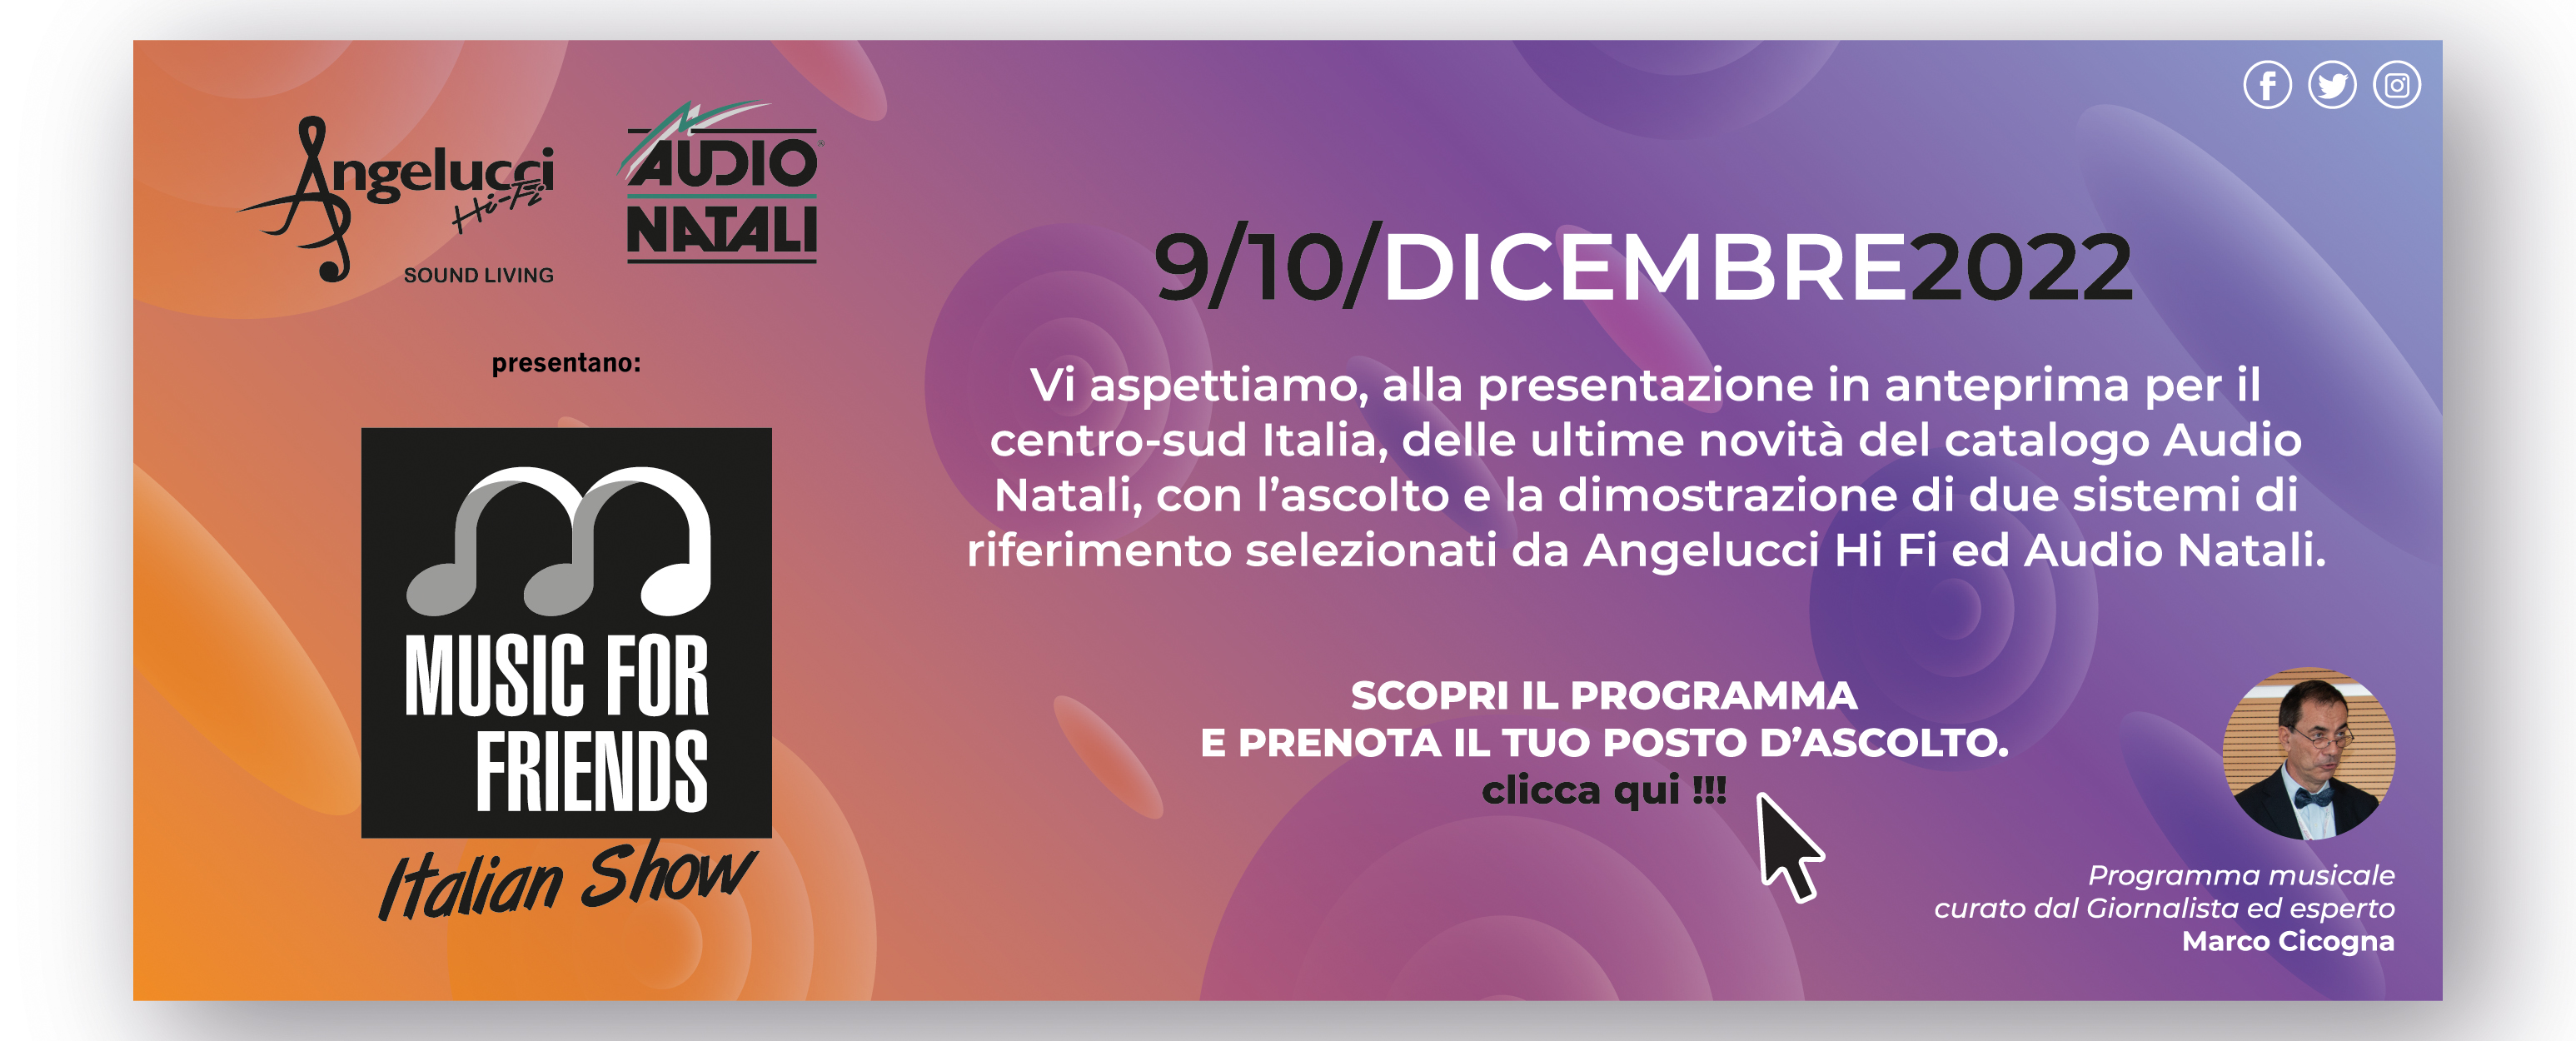 news AudioNatali - Angelucci HiFi & Audio Natali presentano Music For Friends - Italian Show